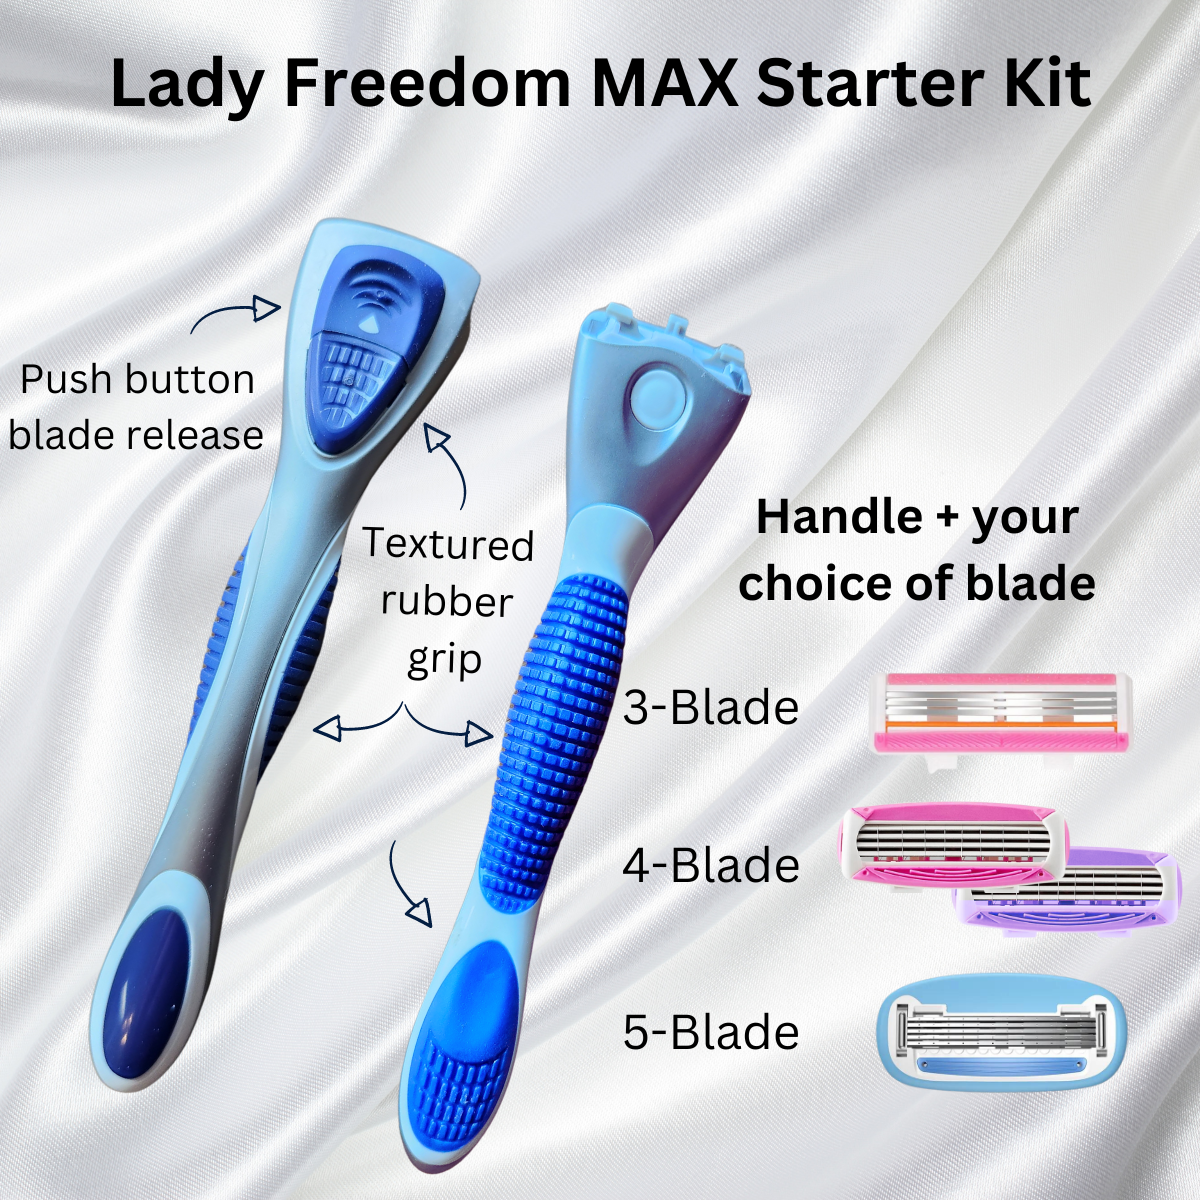 NEW! Lady Freedom MAX Starter Kit